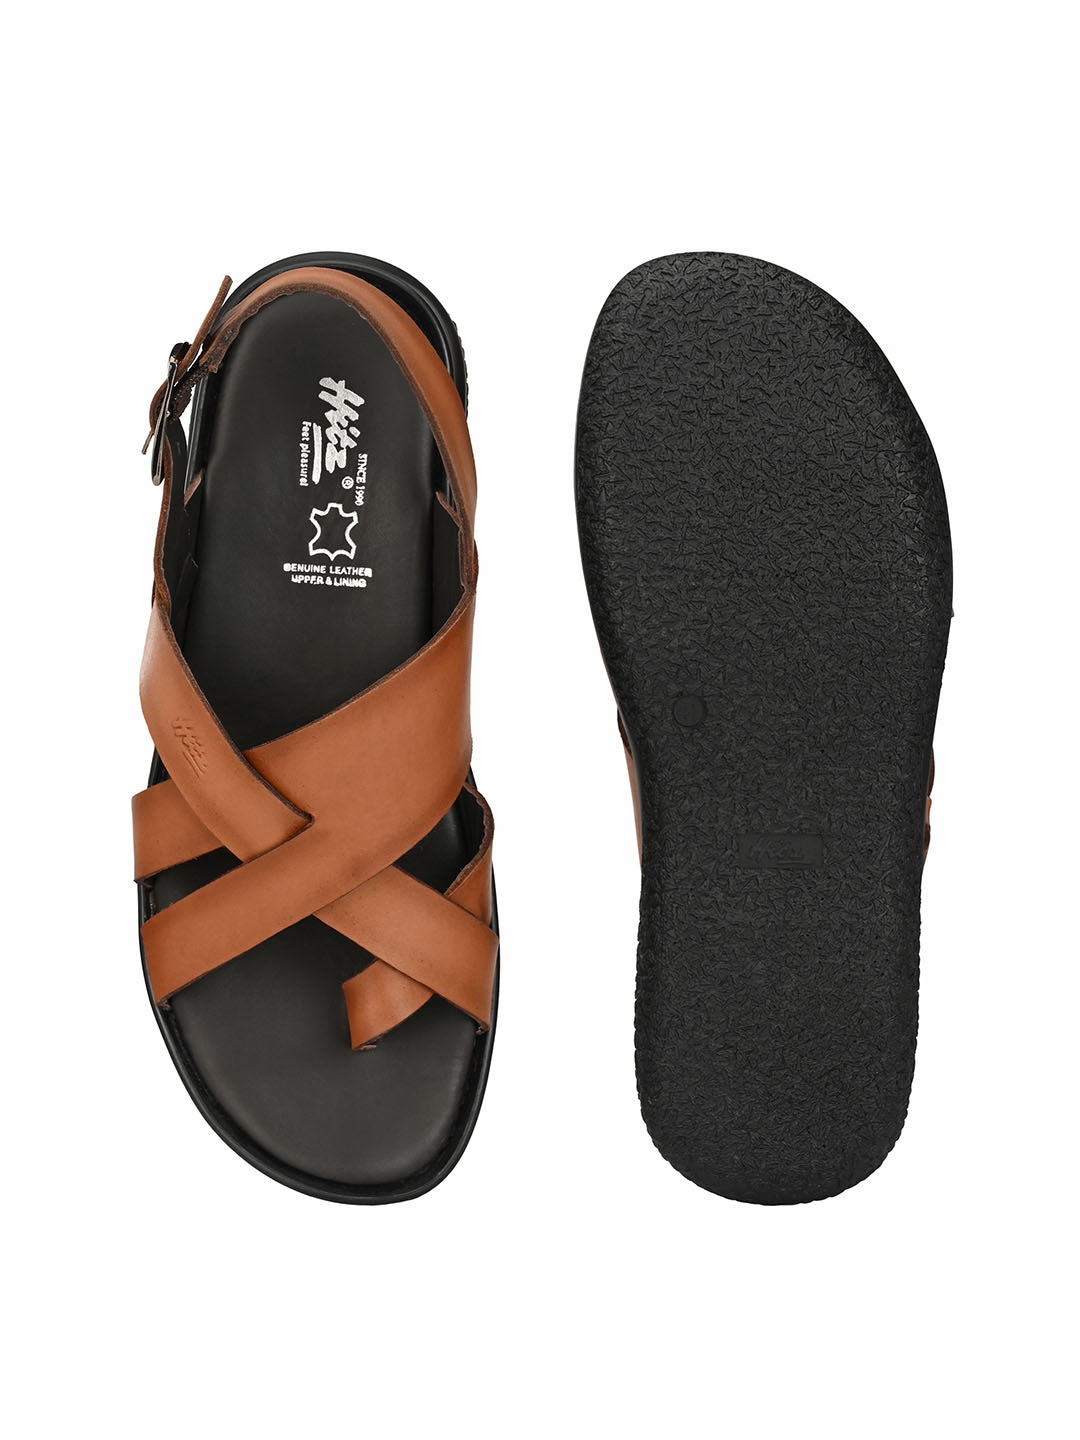 Free People look-a-like toe ring sandal leather | Real leather sandals, Toe  ring sandals, Leather sandals